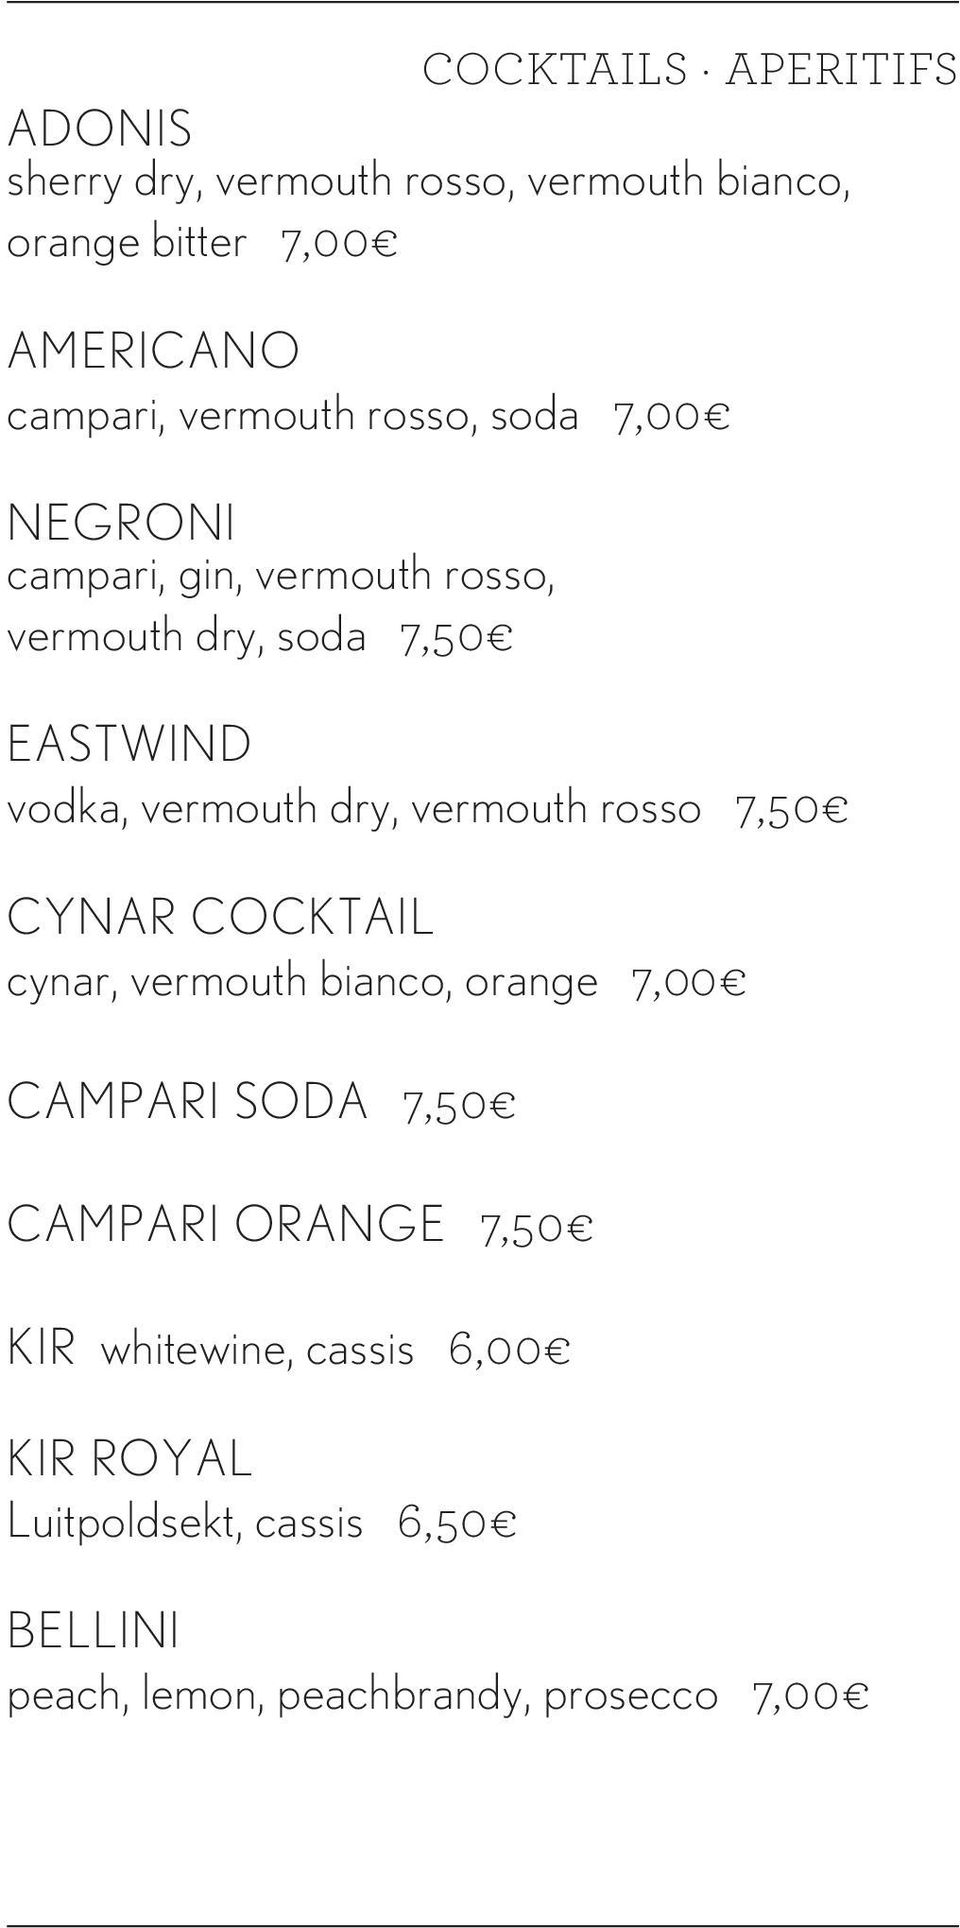 vermouth dry, vermouth rosso 7,50 Cynar Cocktail cynar, vermouth bianco, orange 7,00 Campari Soda 7,50 Campari